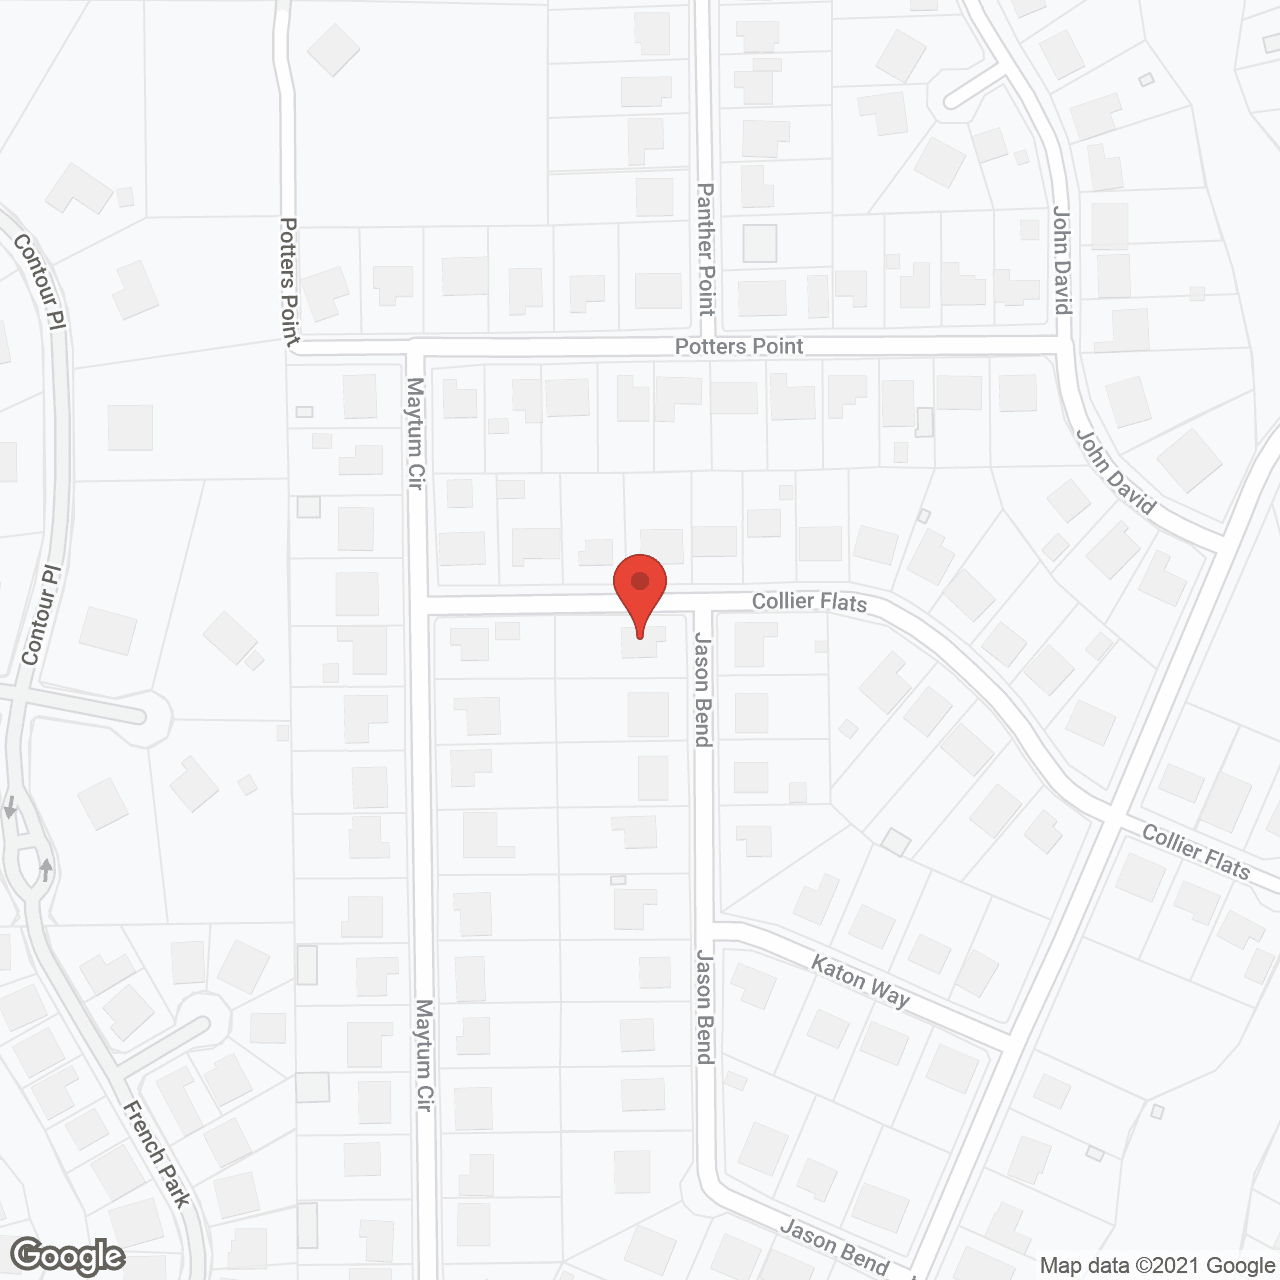 San Antonio - A+ CARE 1 in google map